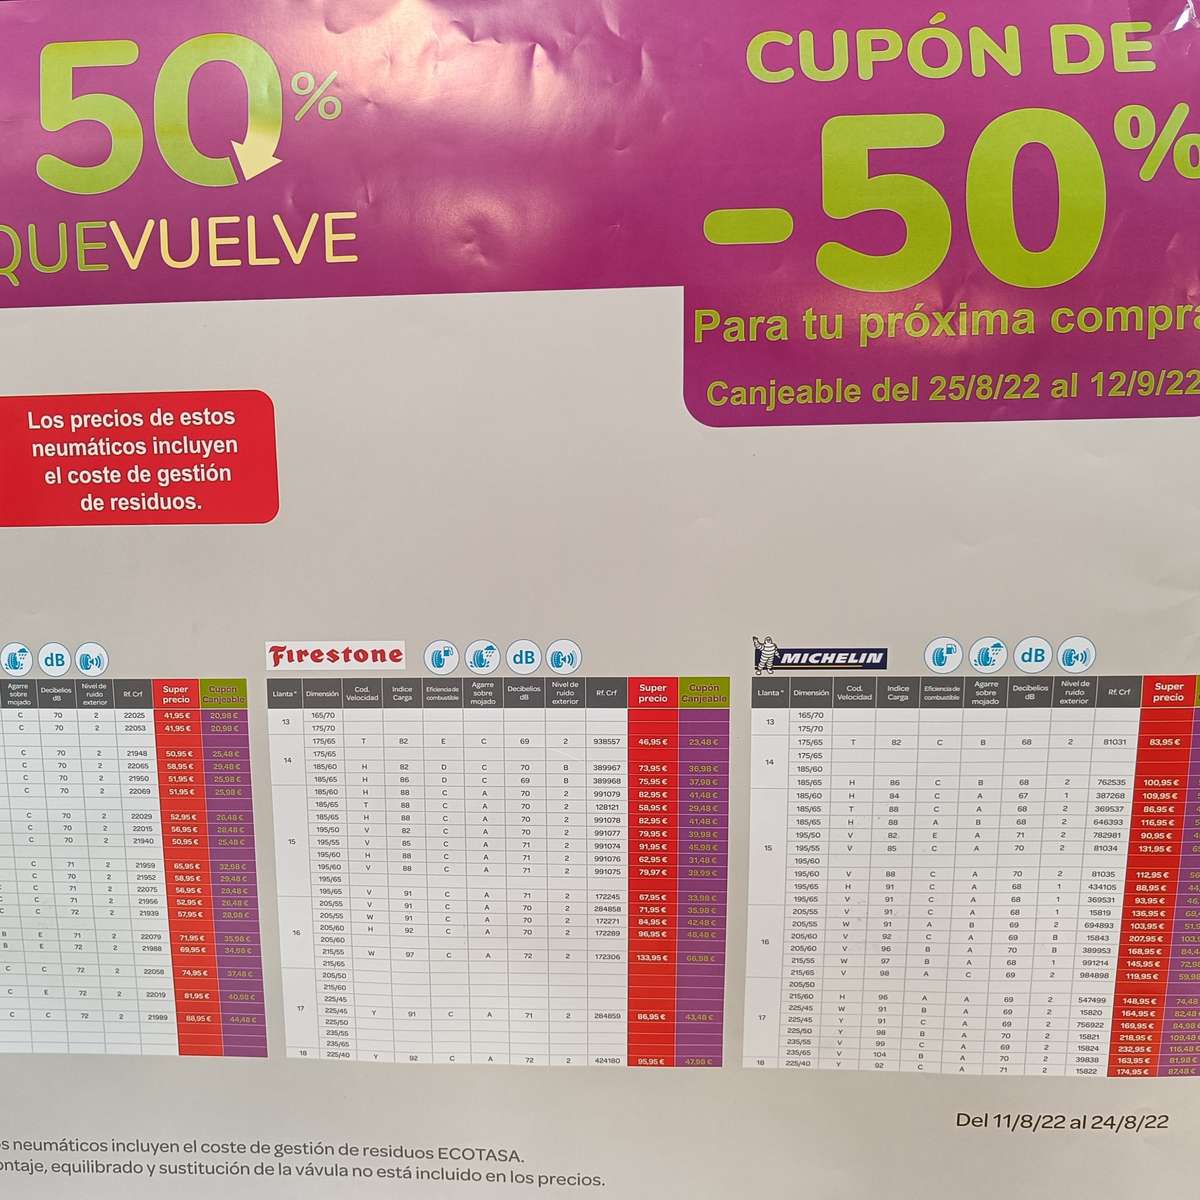 50% que vuelve al comprar neumáticos en Carrefour » Chollometro